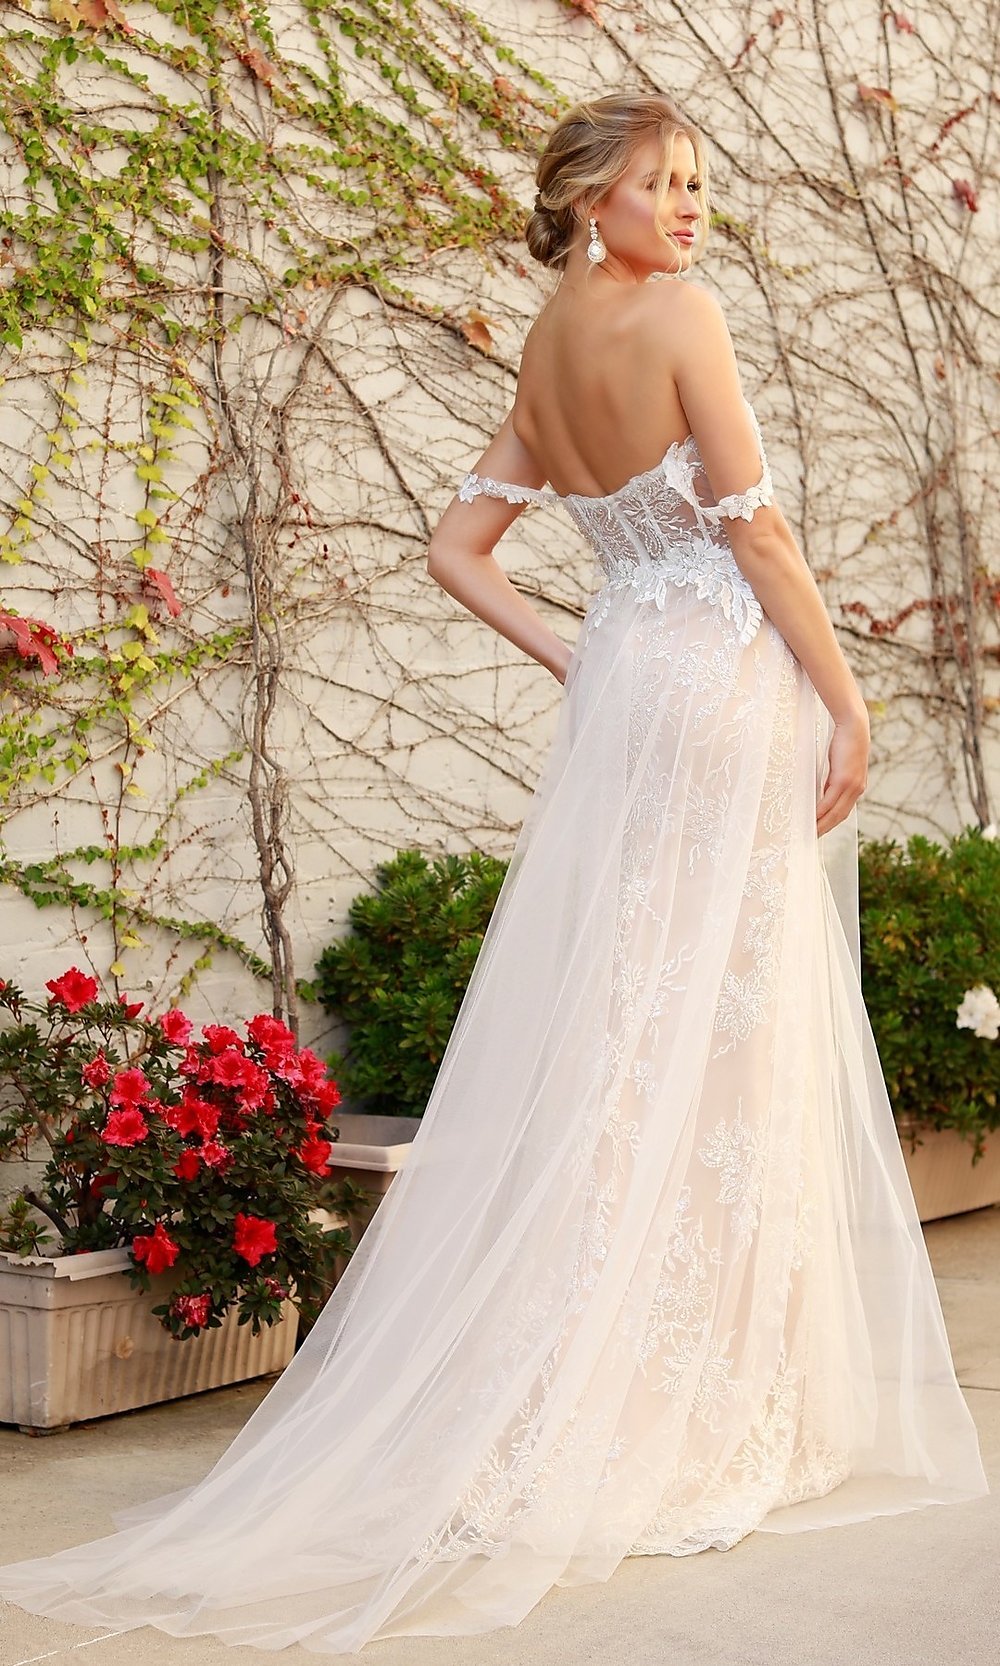 Simple white tulle long prom dress, white tulle formal dress